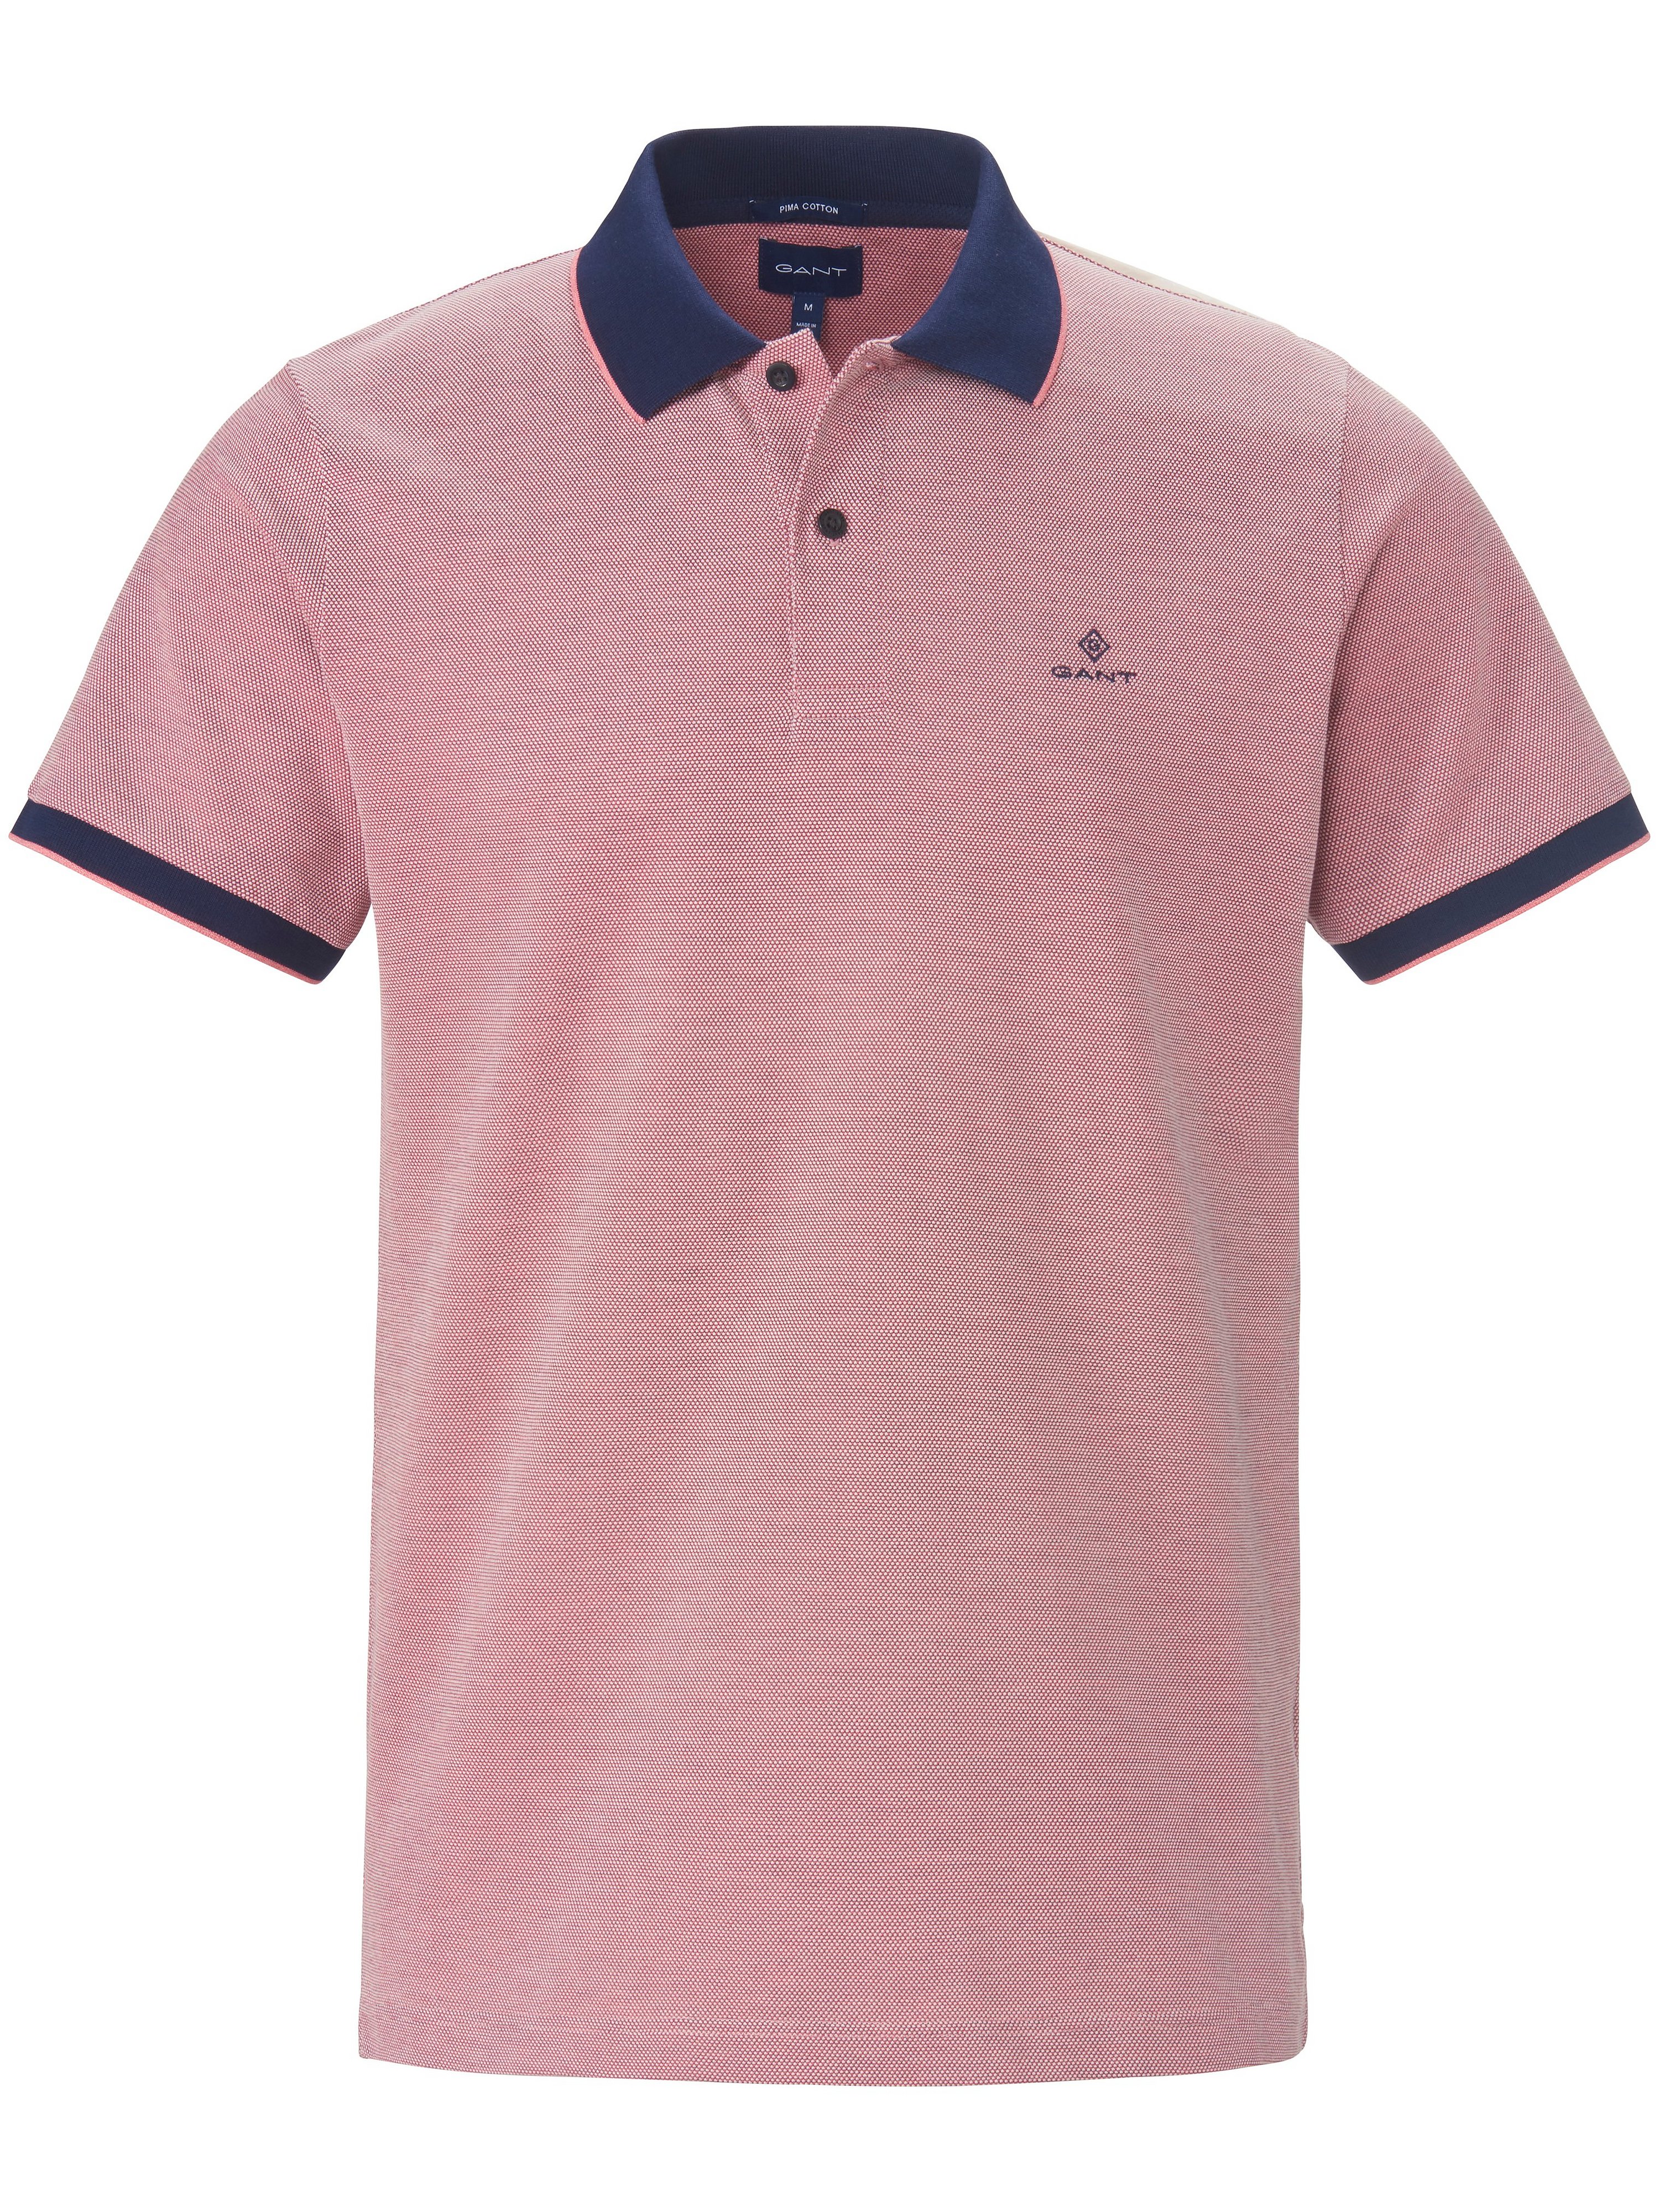 Polo shirt short sleeves GANT pale pink